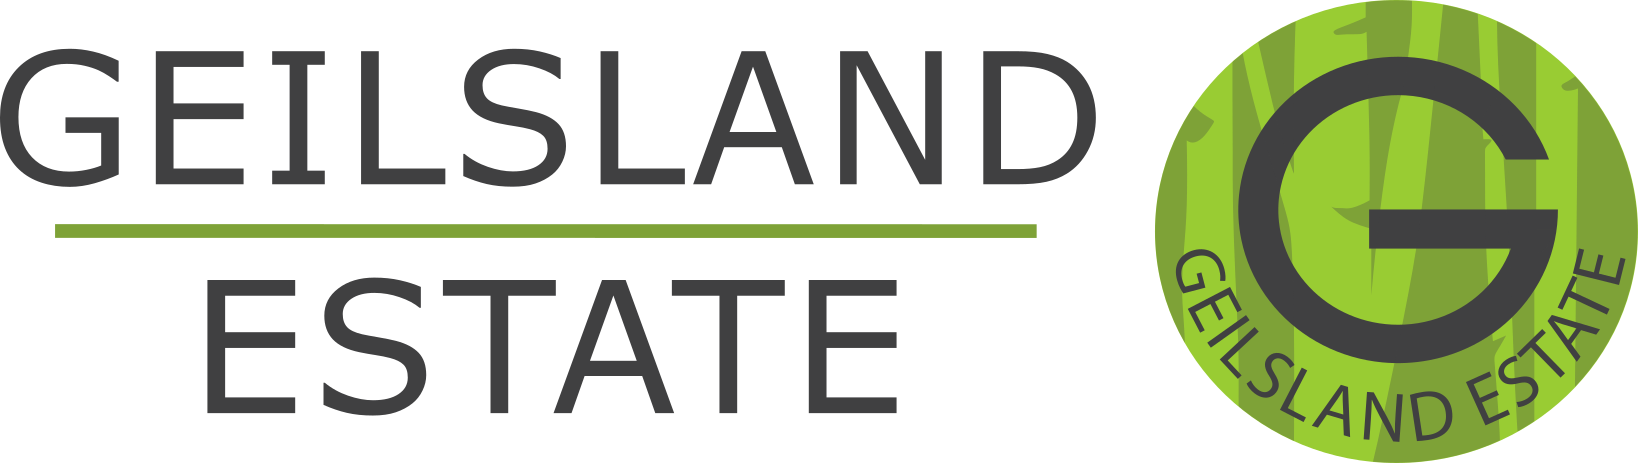 Geilsland Estate logo